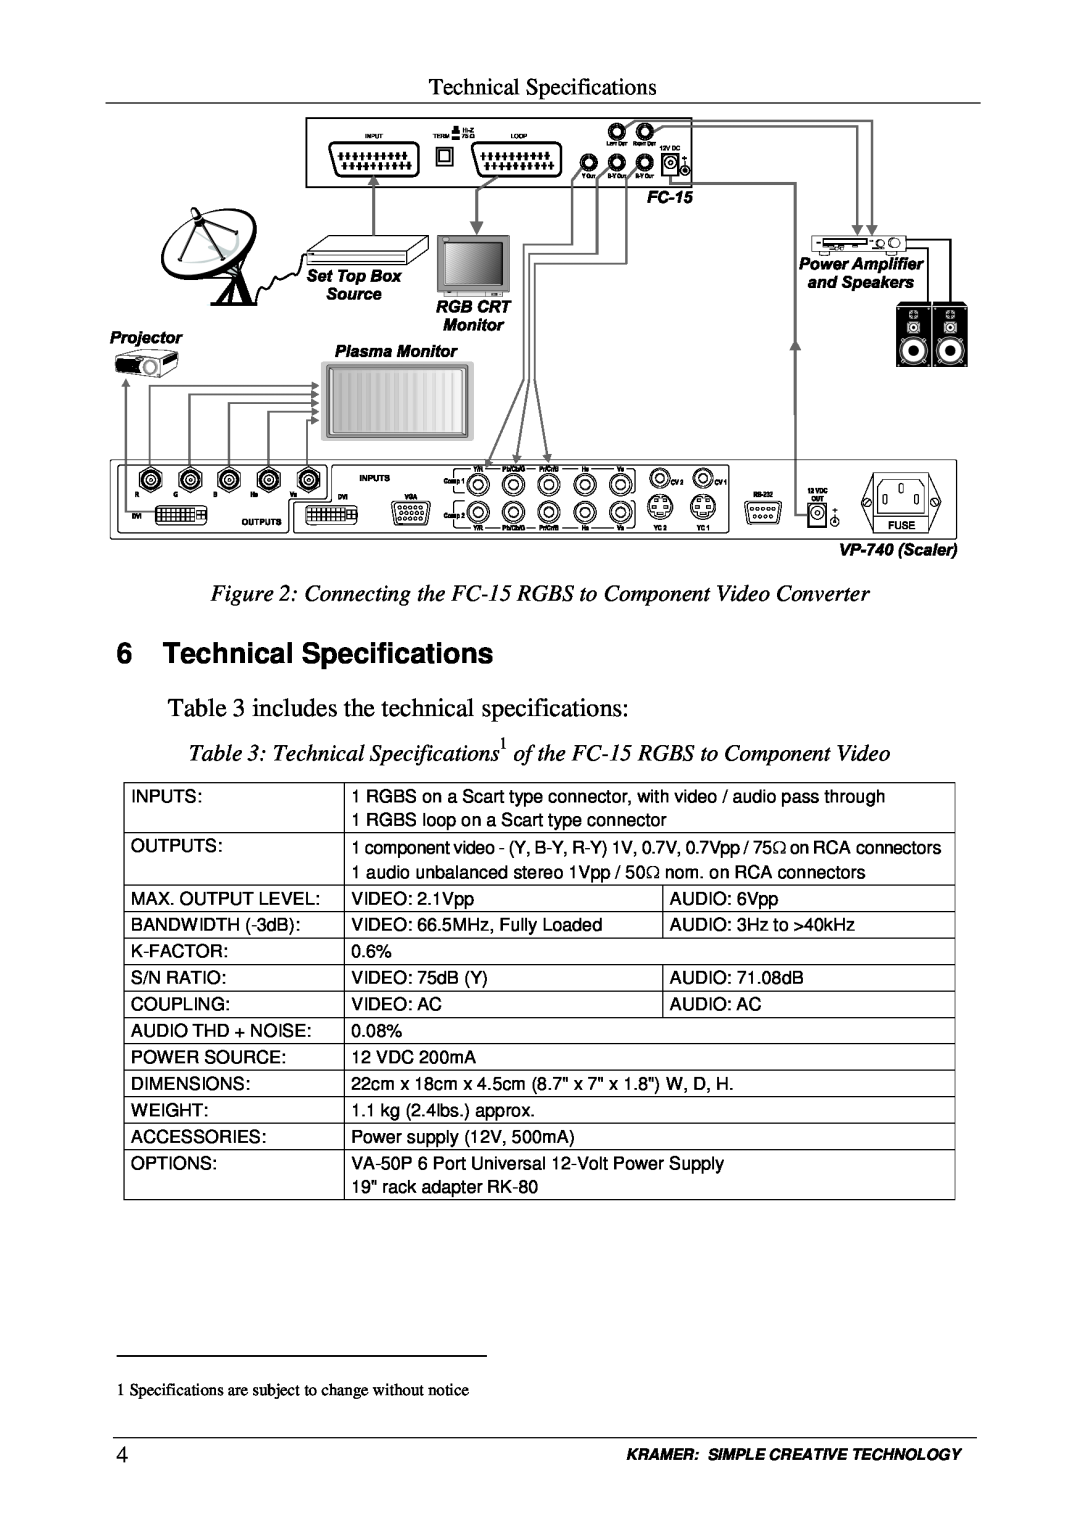 Kramer Electronics FC-15 user manual Technical Specifications, includes the technical specifications 